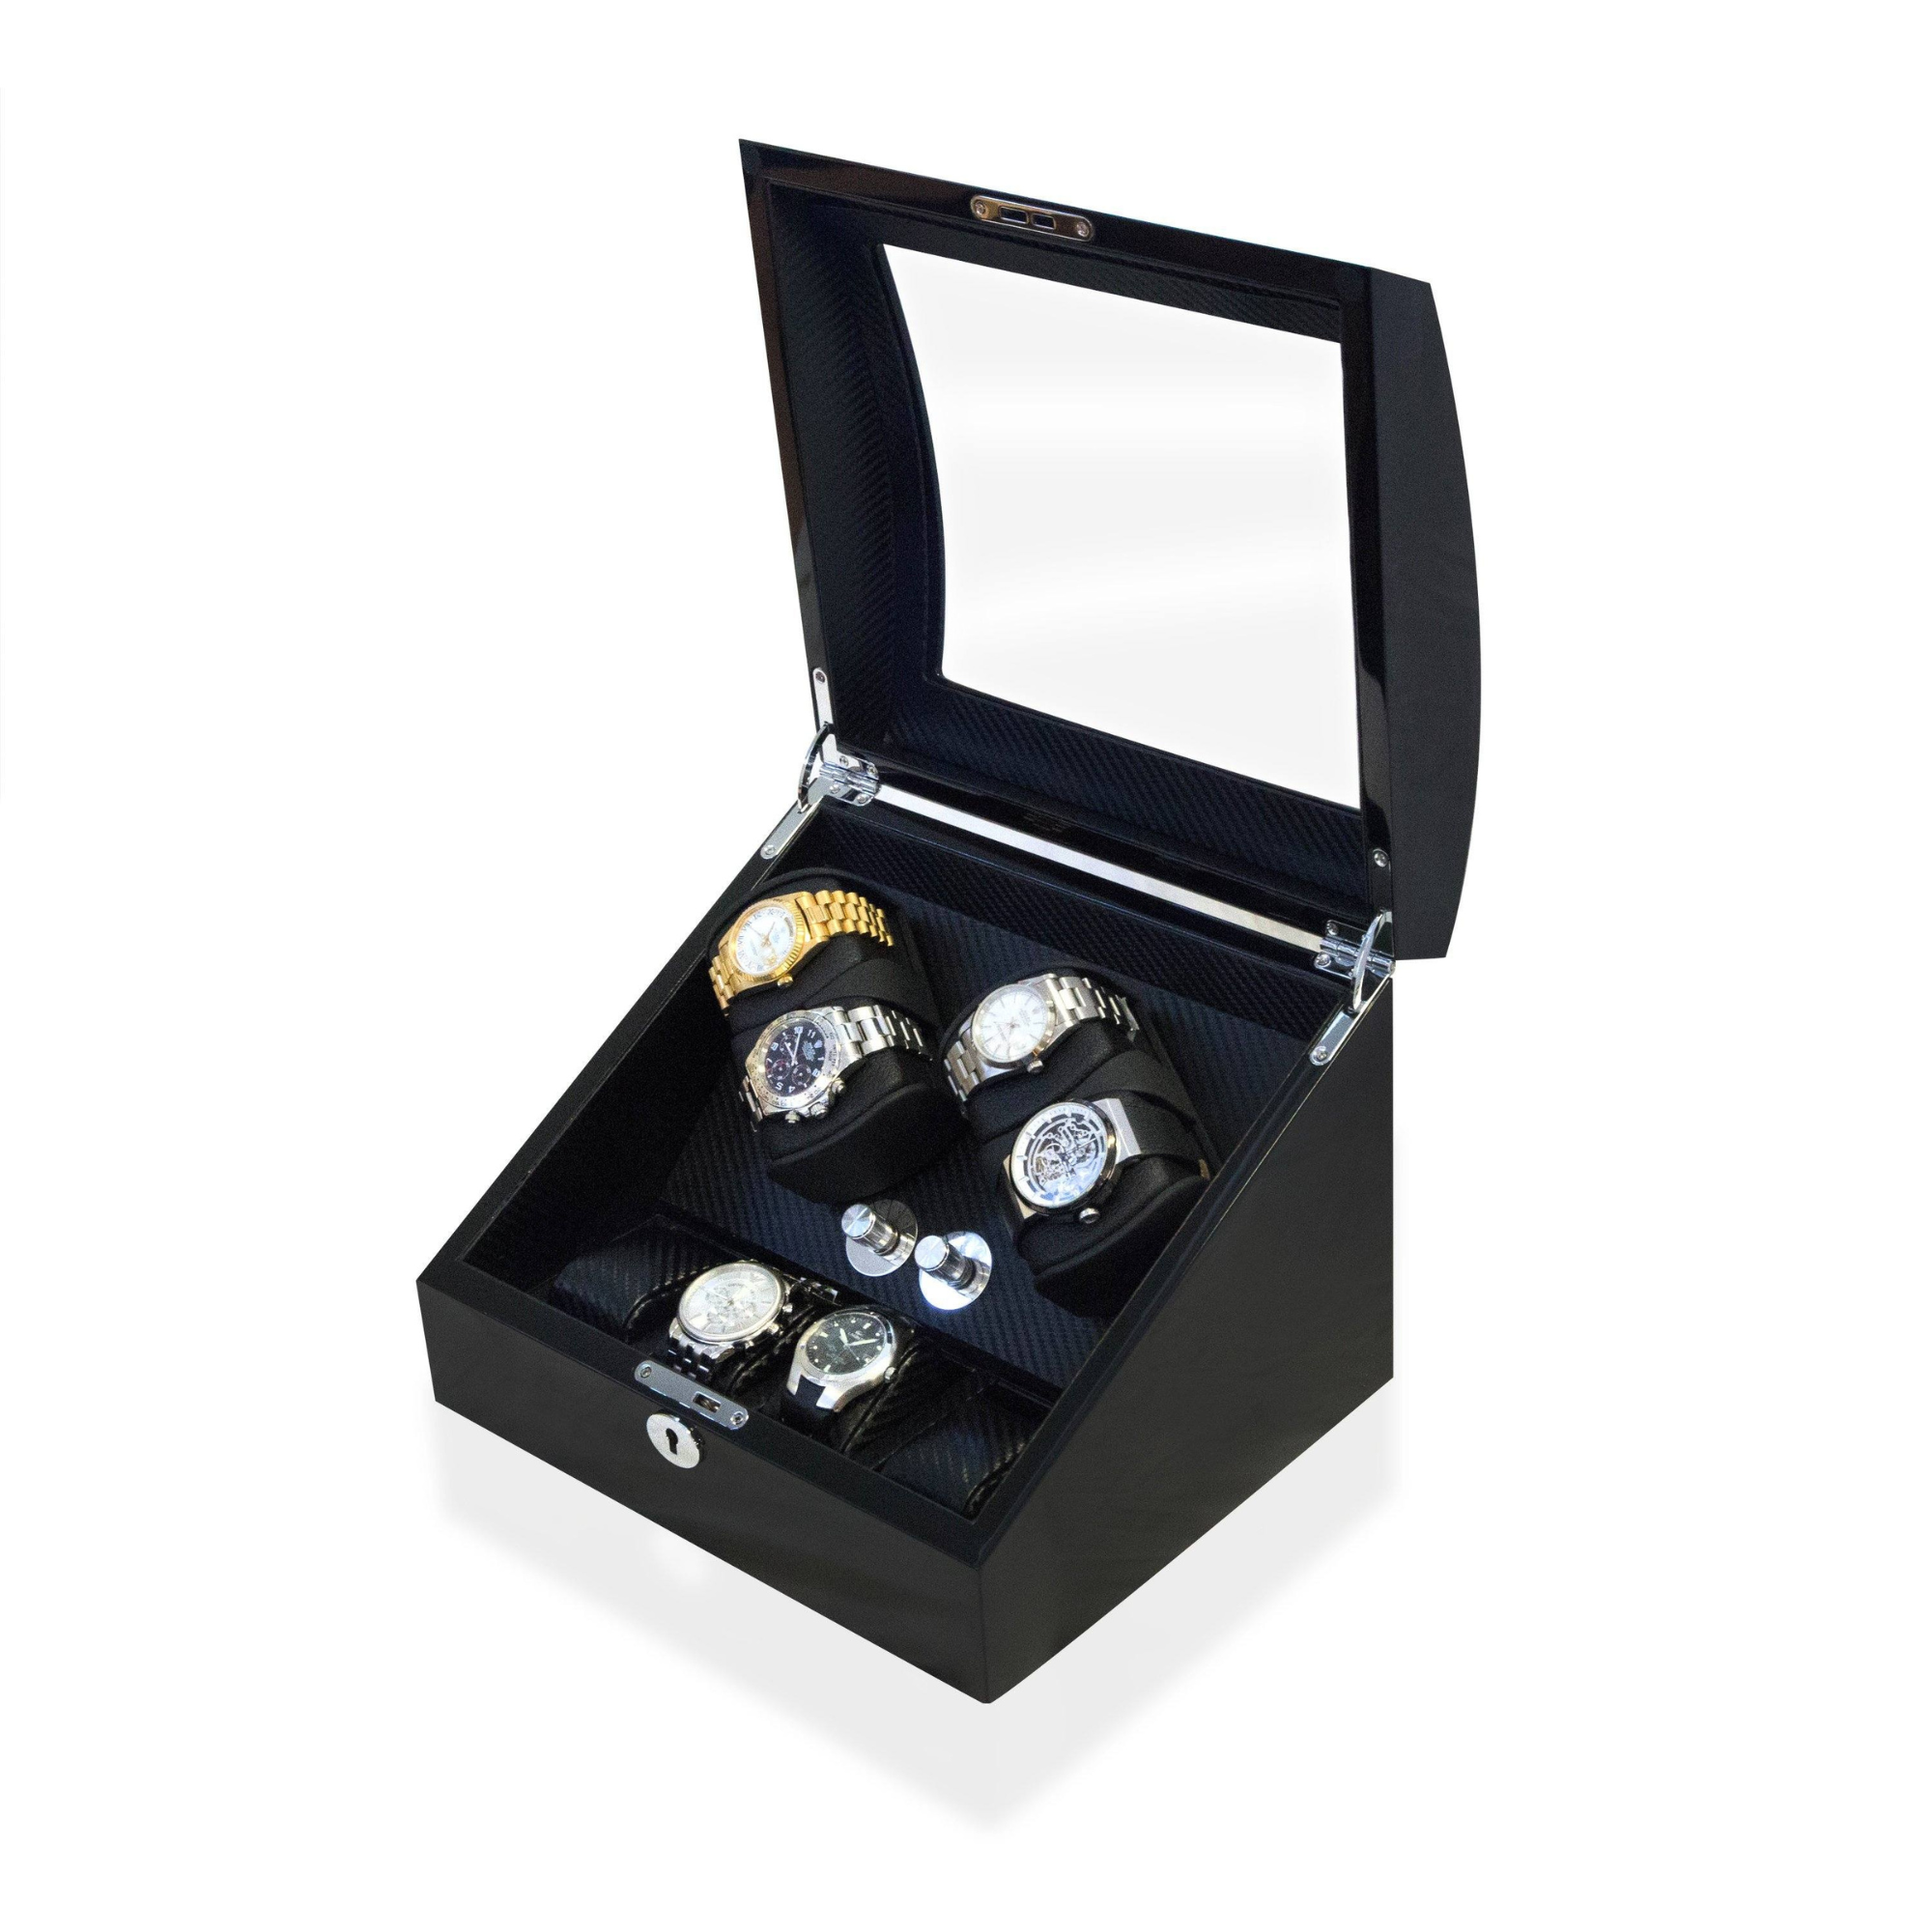 Avoca Watch Winder Box 4 + 4 Watches in Black - Carbon Fibre Interior